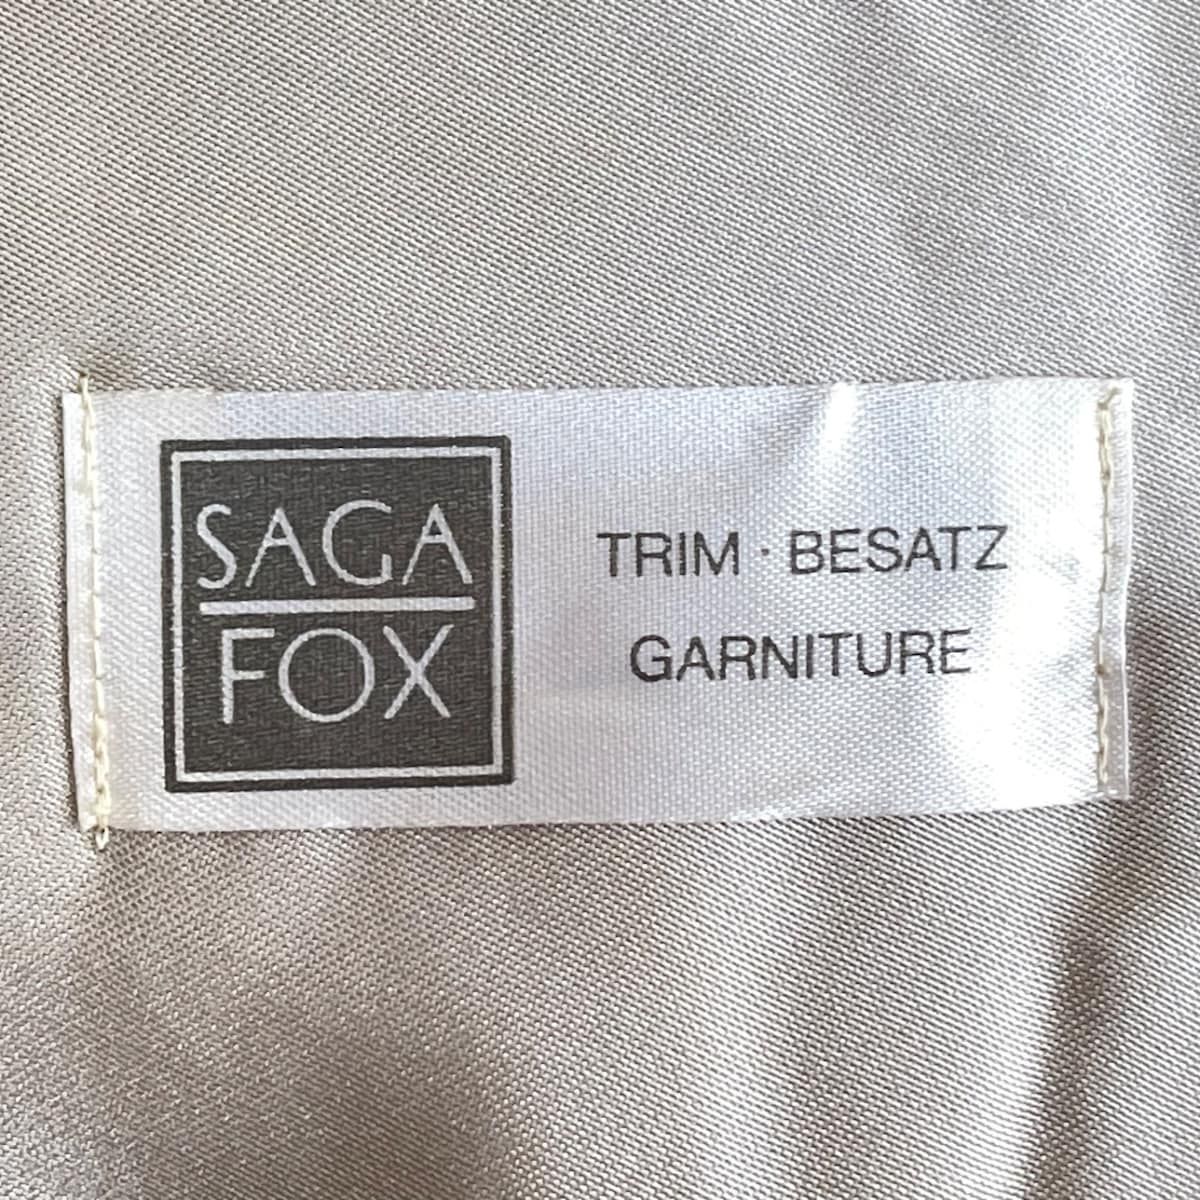 SAGA FOX(サガフォックス) マフラー美品 - アイボリー×ダークブラウン ...